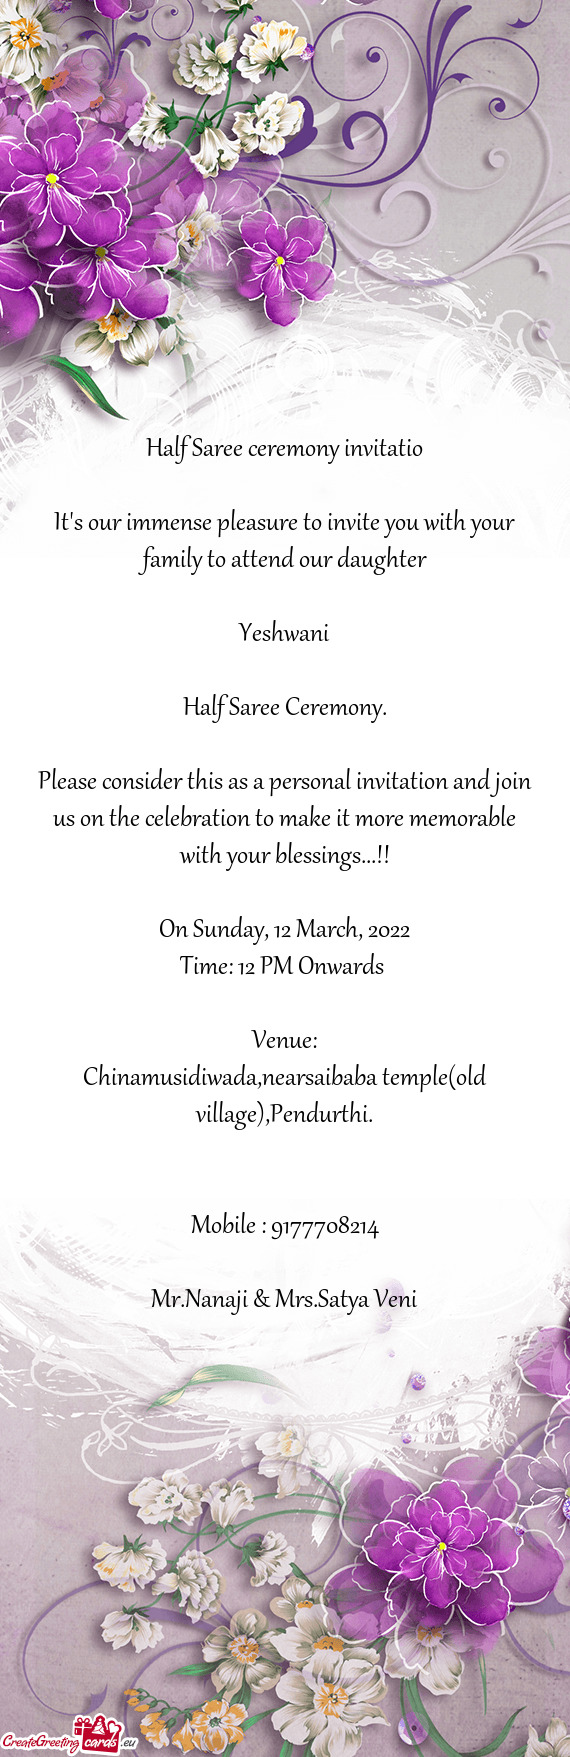 Half Saree ceremony invitatio